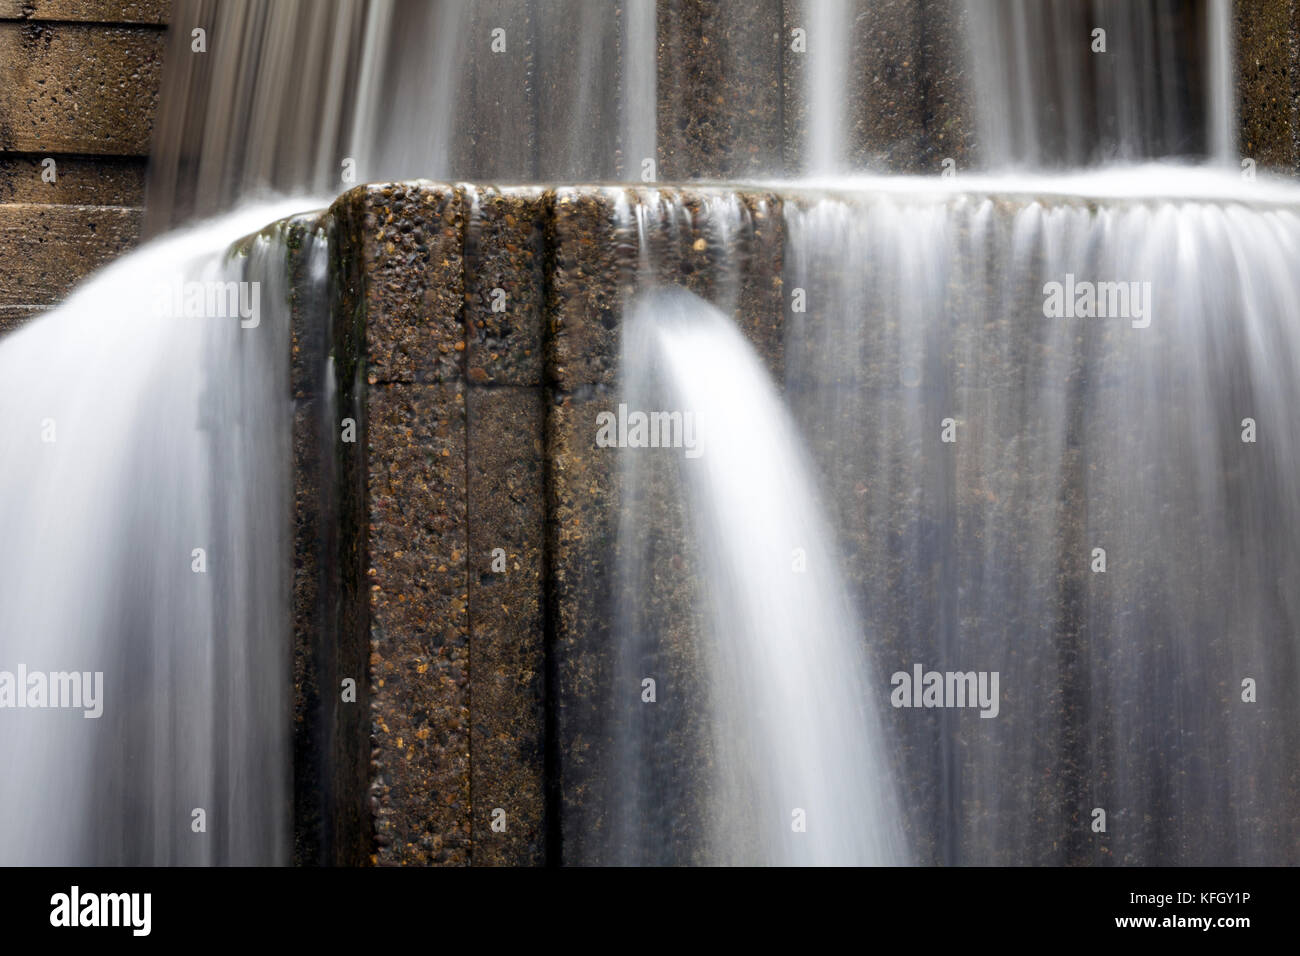 WA14177-00...WASHINGTON - Wasserspiel im Freeway Park in Seattle. Stockfoto